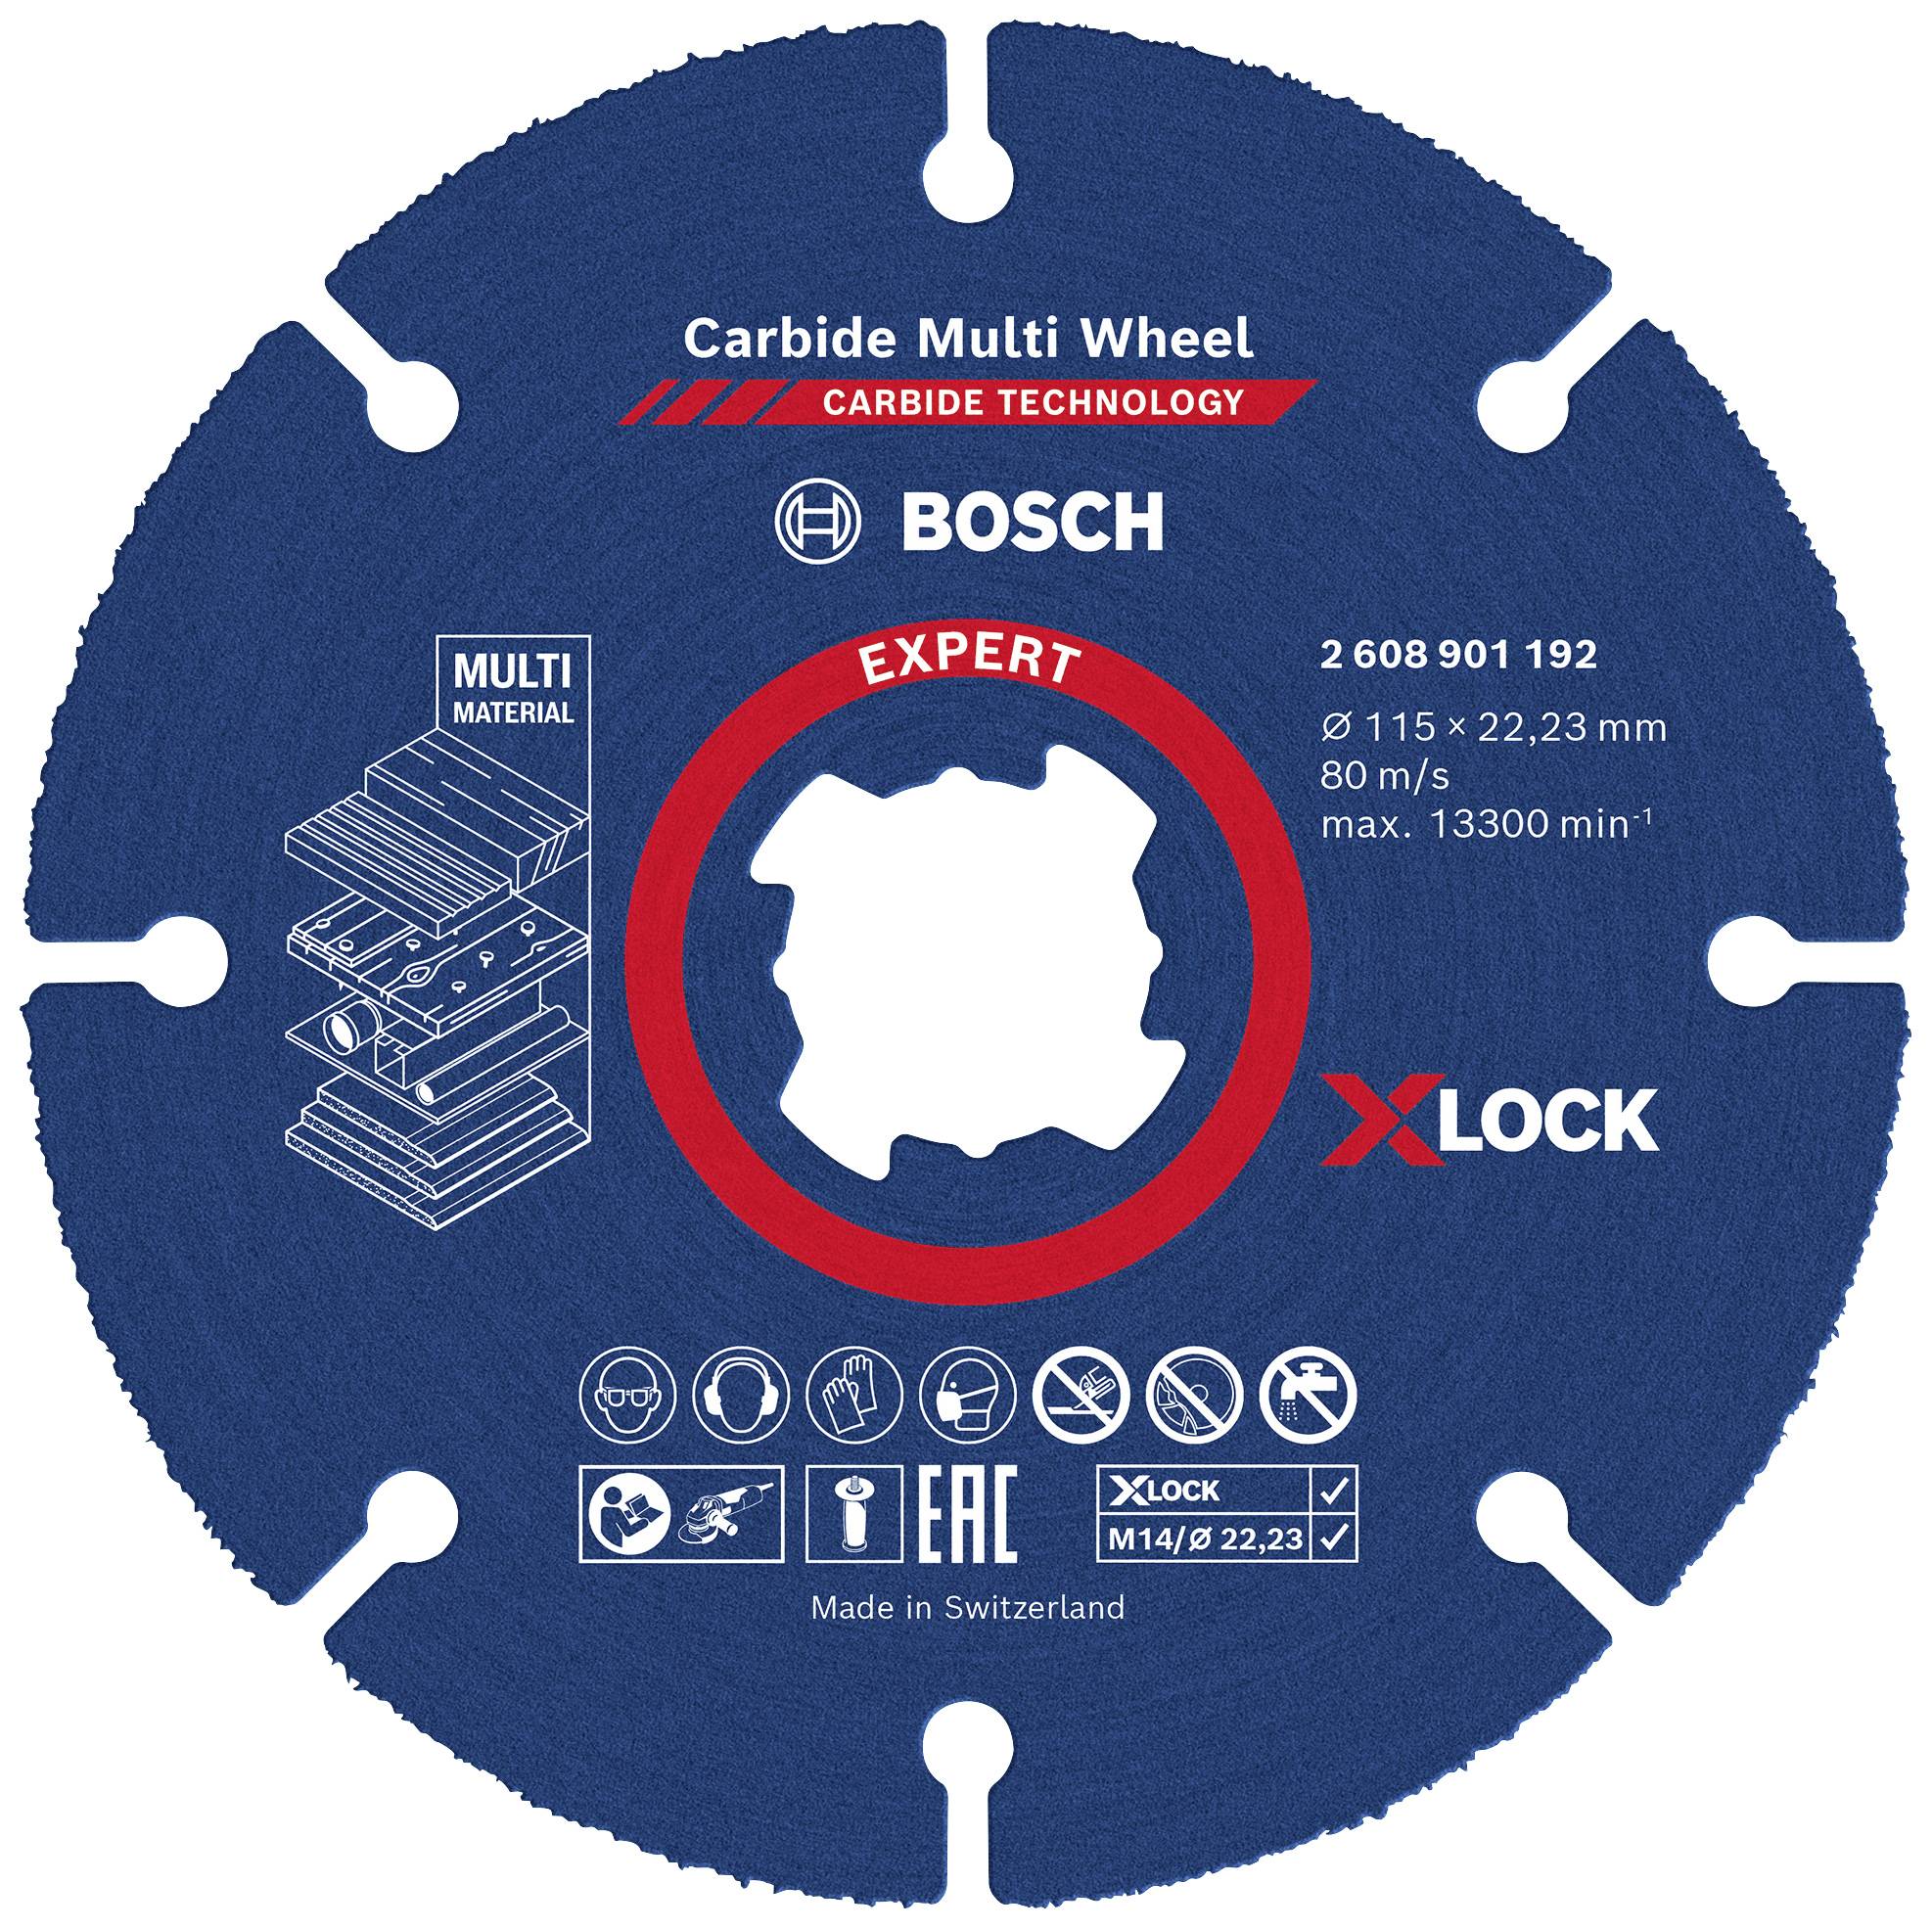 BOSCH Accessories EXPERT Carbide Multi Wheel X-LOCK 2608901192 Trennscheibe gerade 1 Stück 115